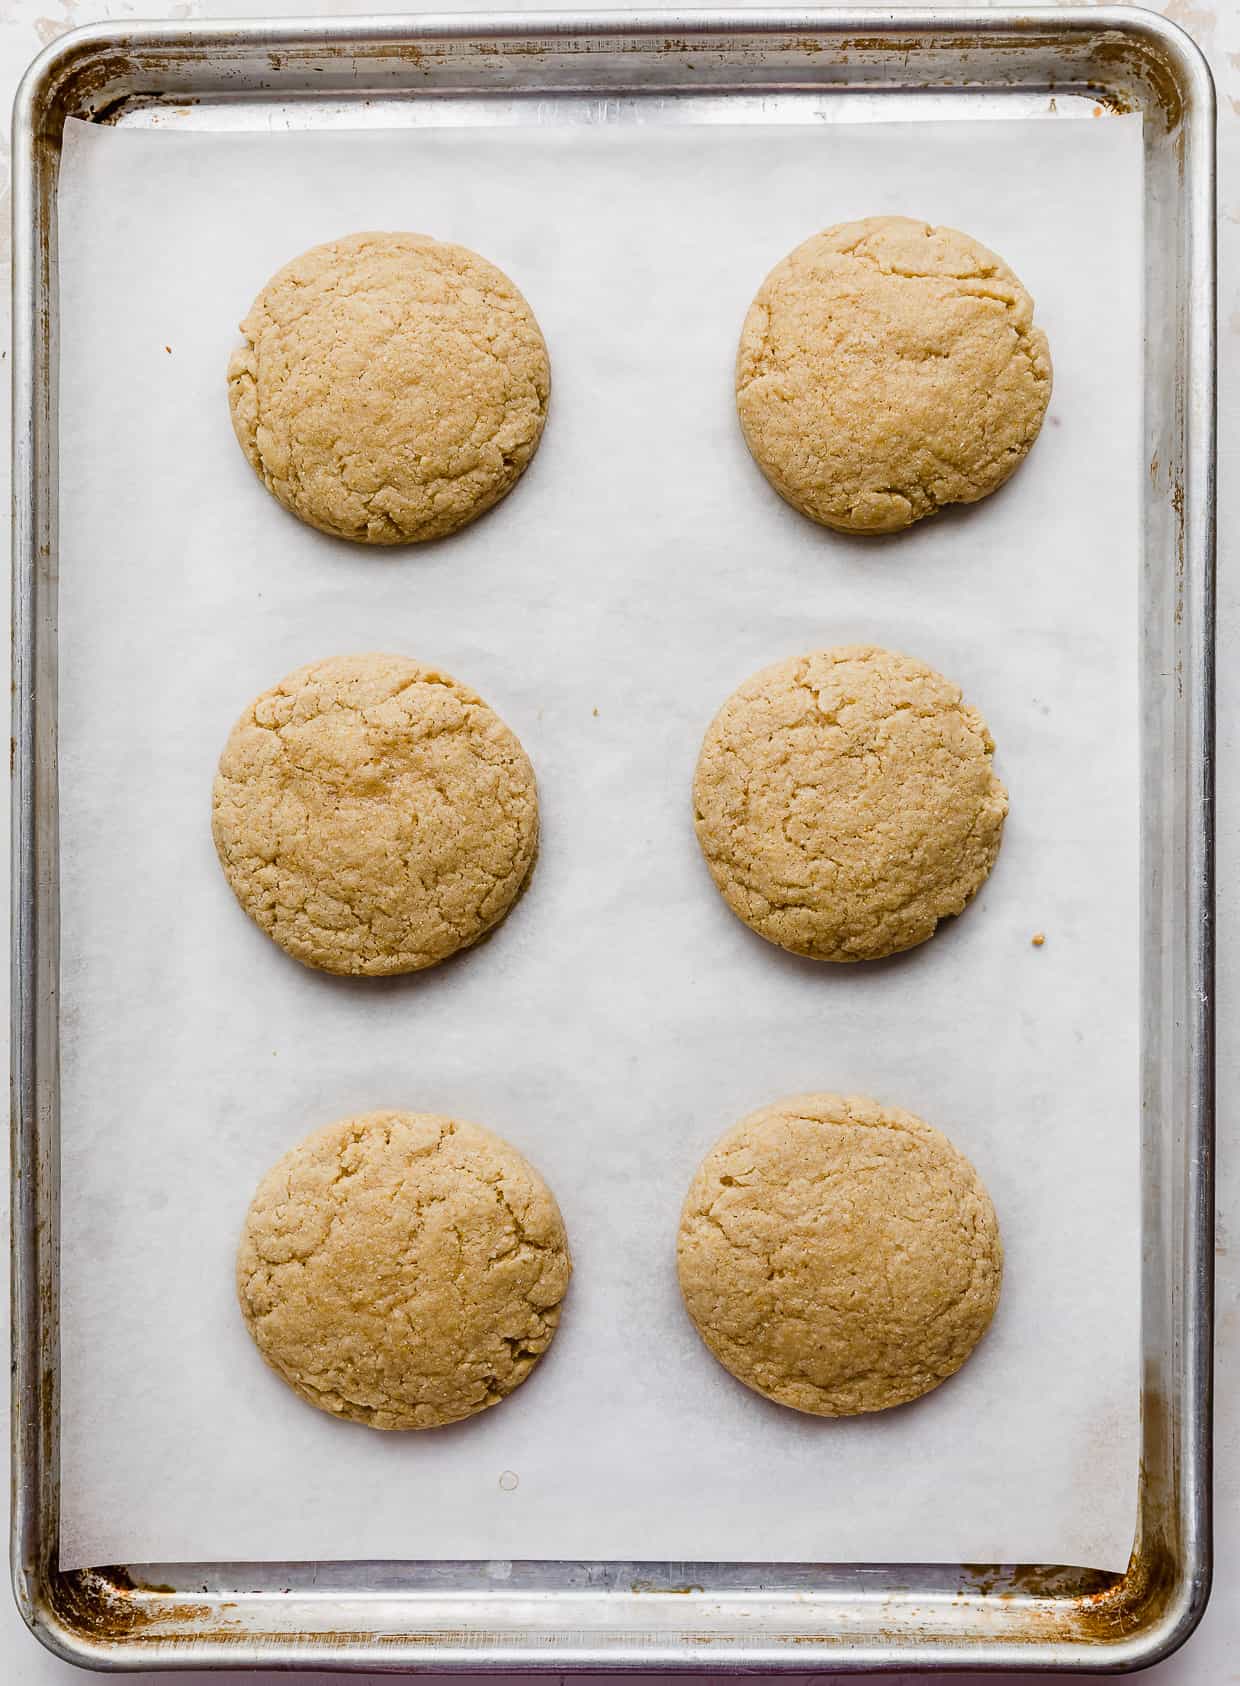 Six baked crumbl cornbread cookies on a baking sheet.